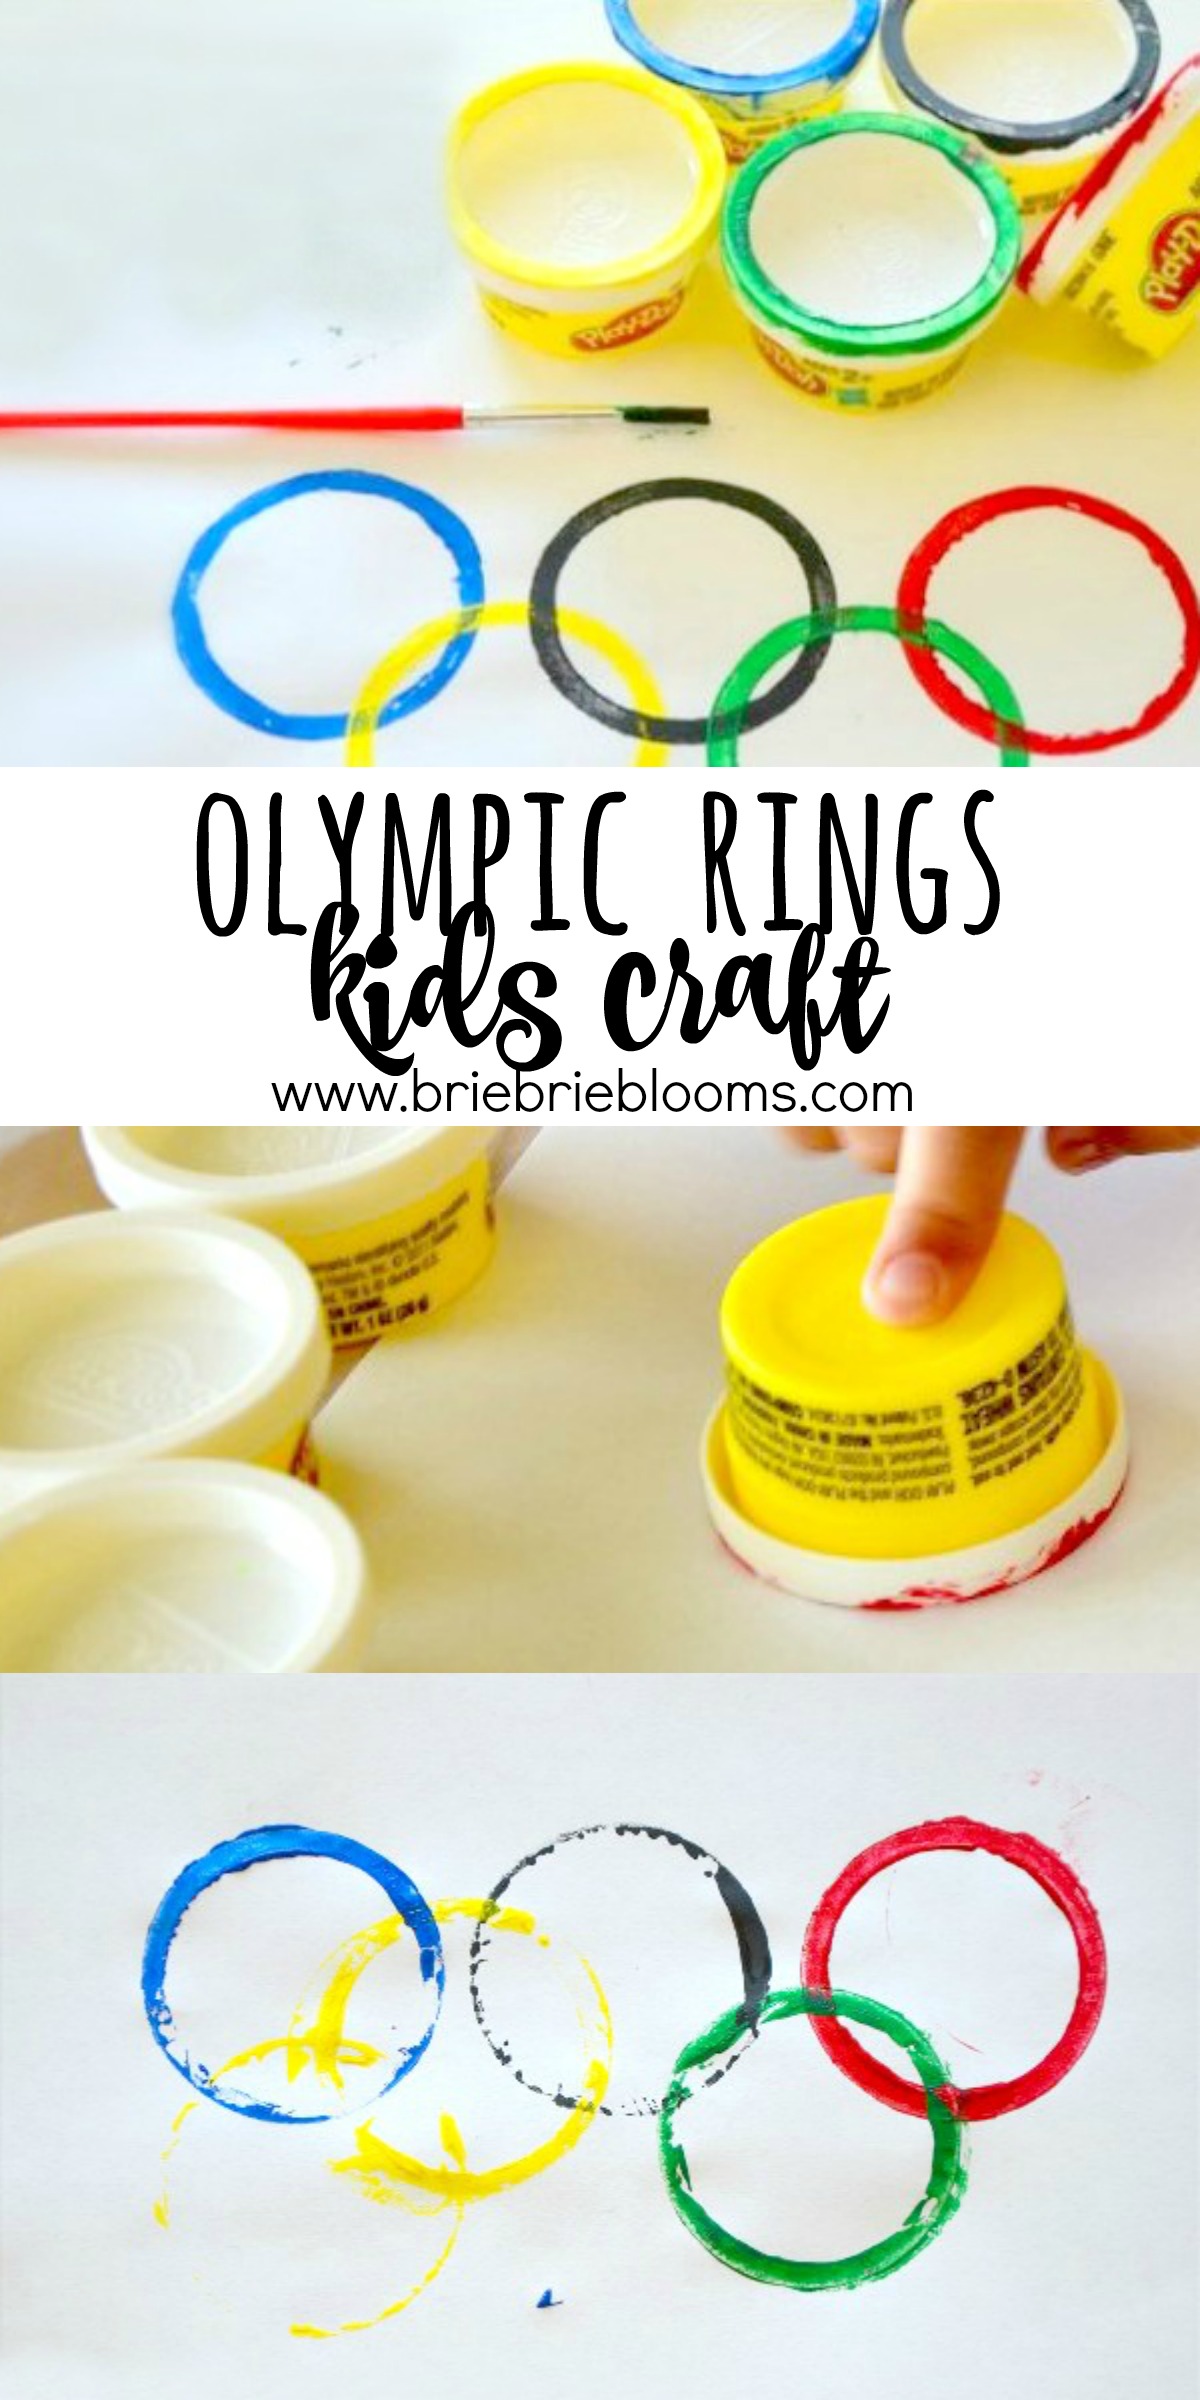 Olympic rings kids craft - Brie Brie Blooms